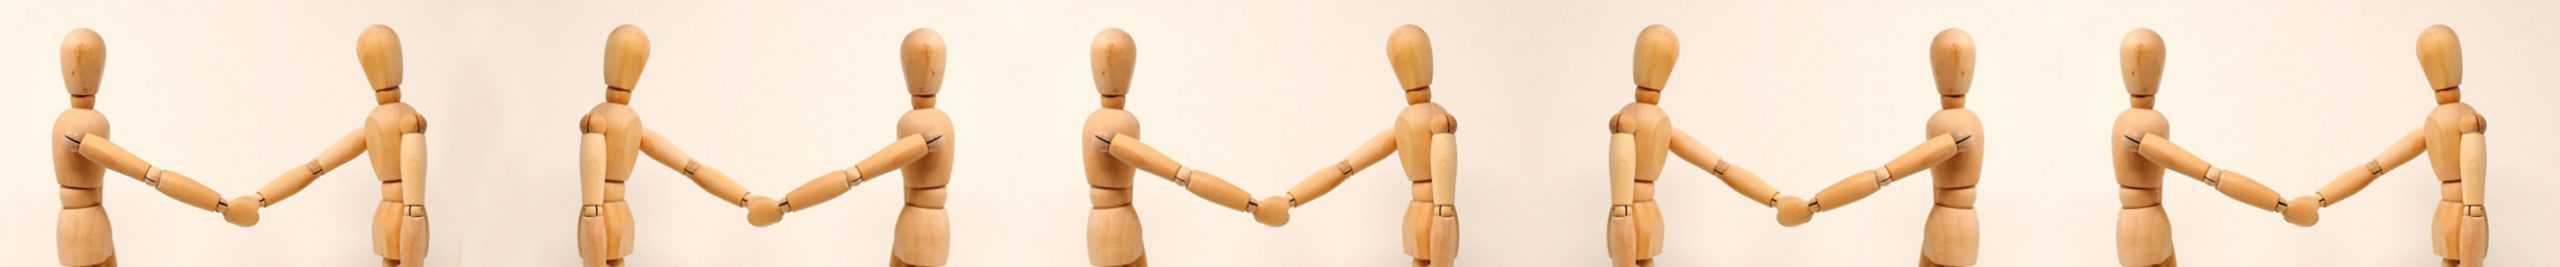 human wooden dolls shake hands